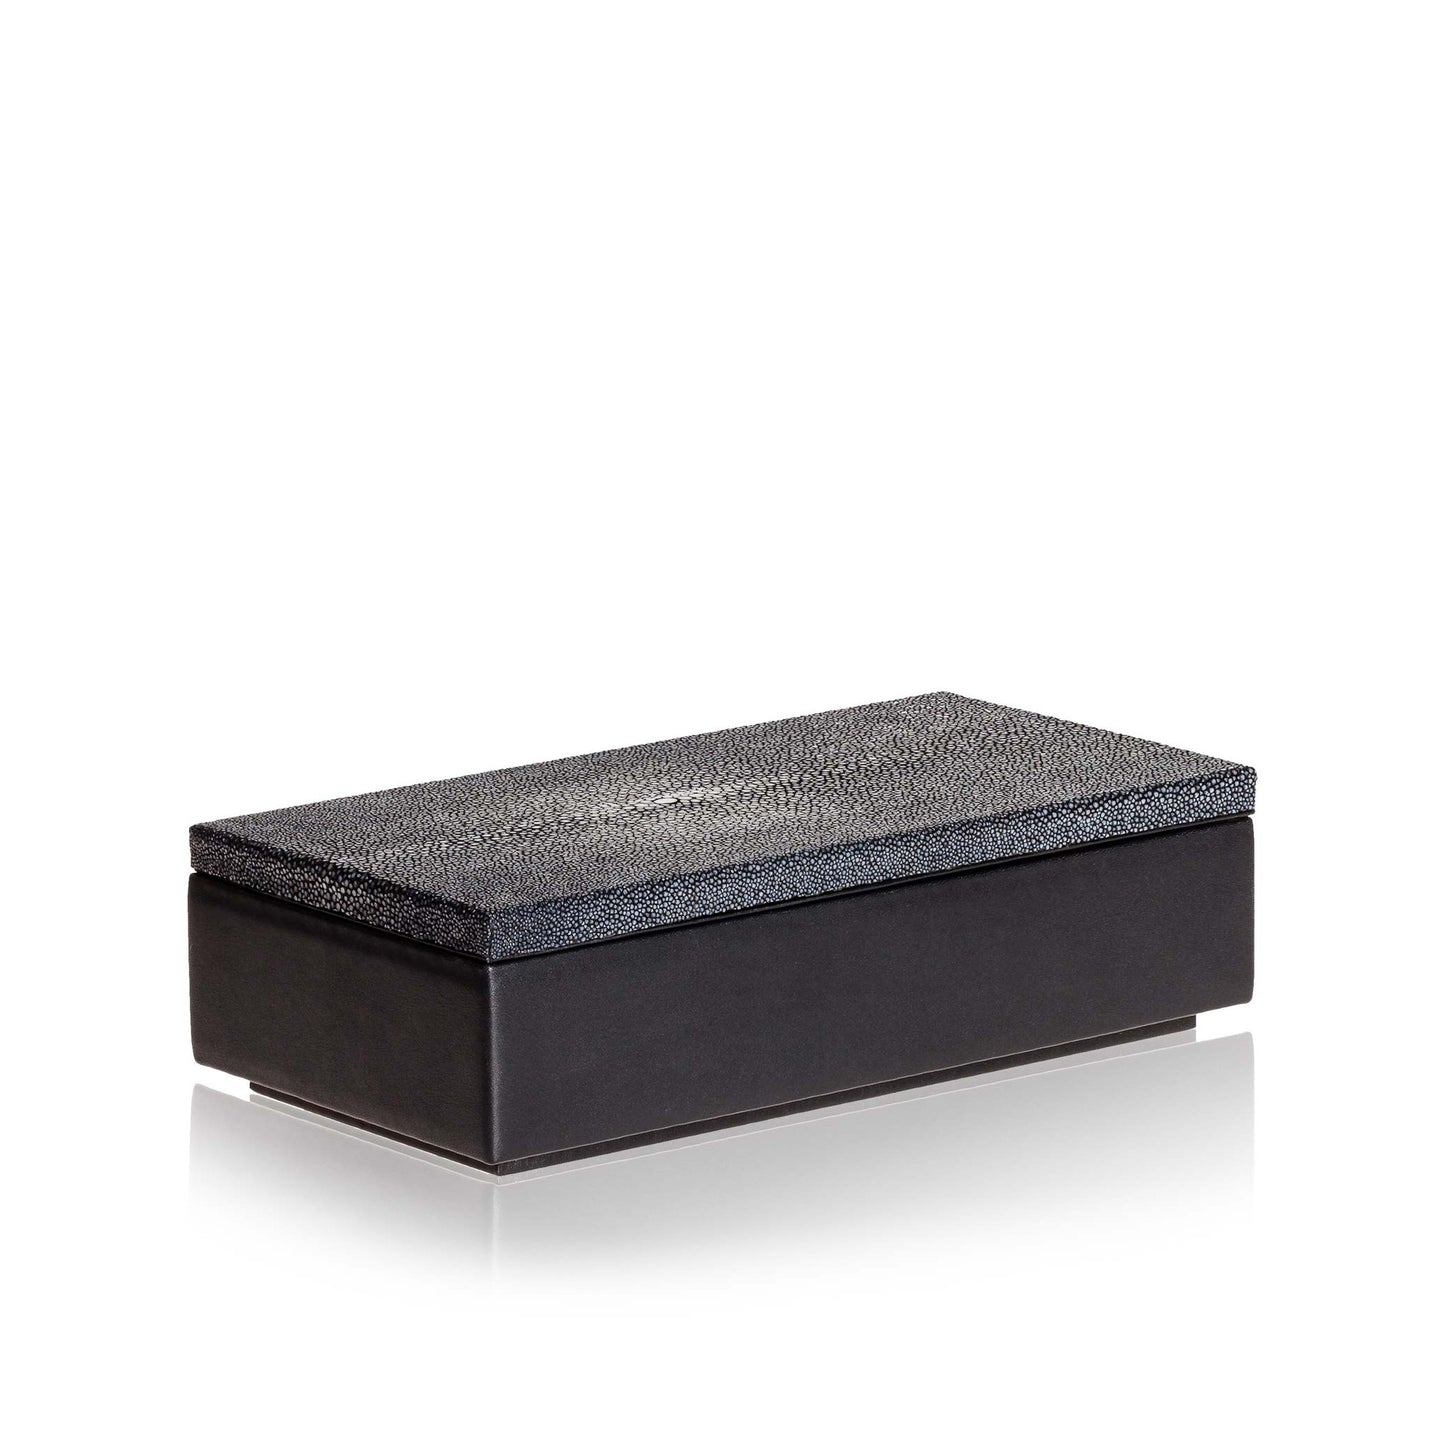 Medium Box in Black Stingray Leather